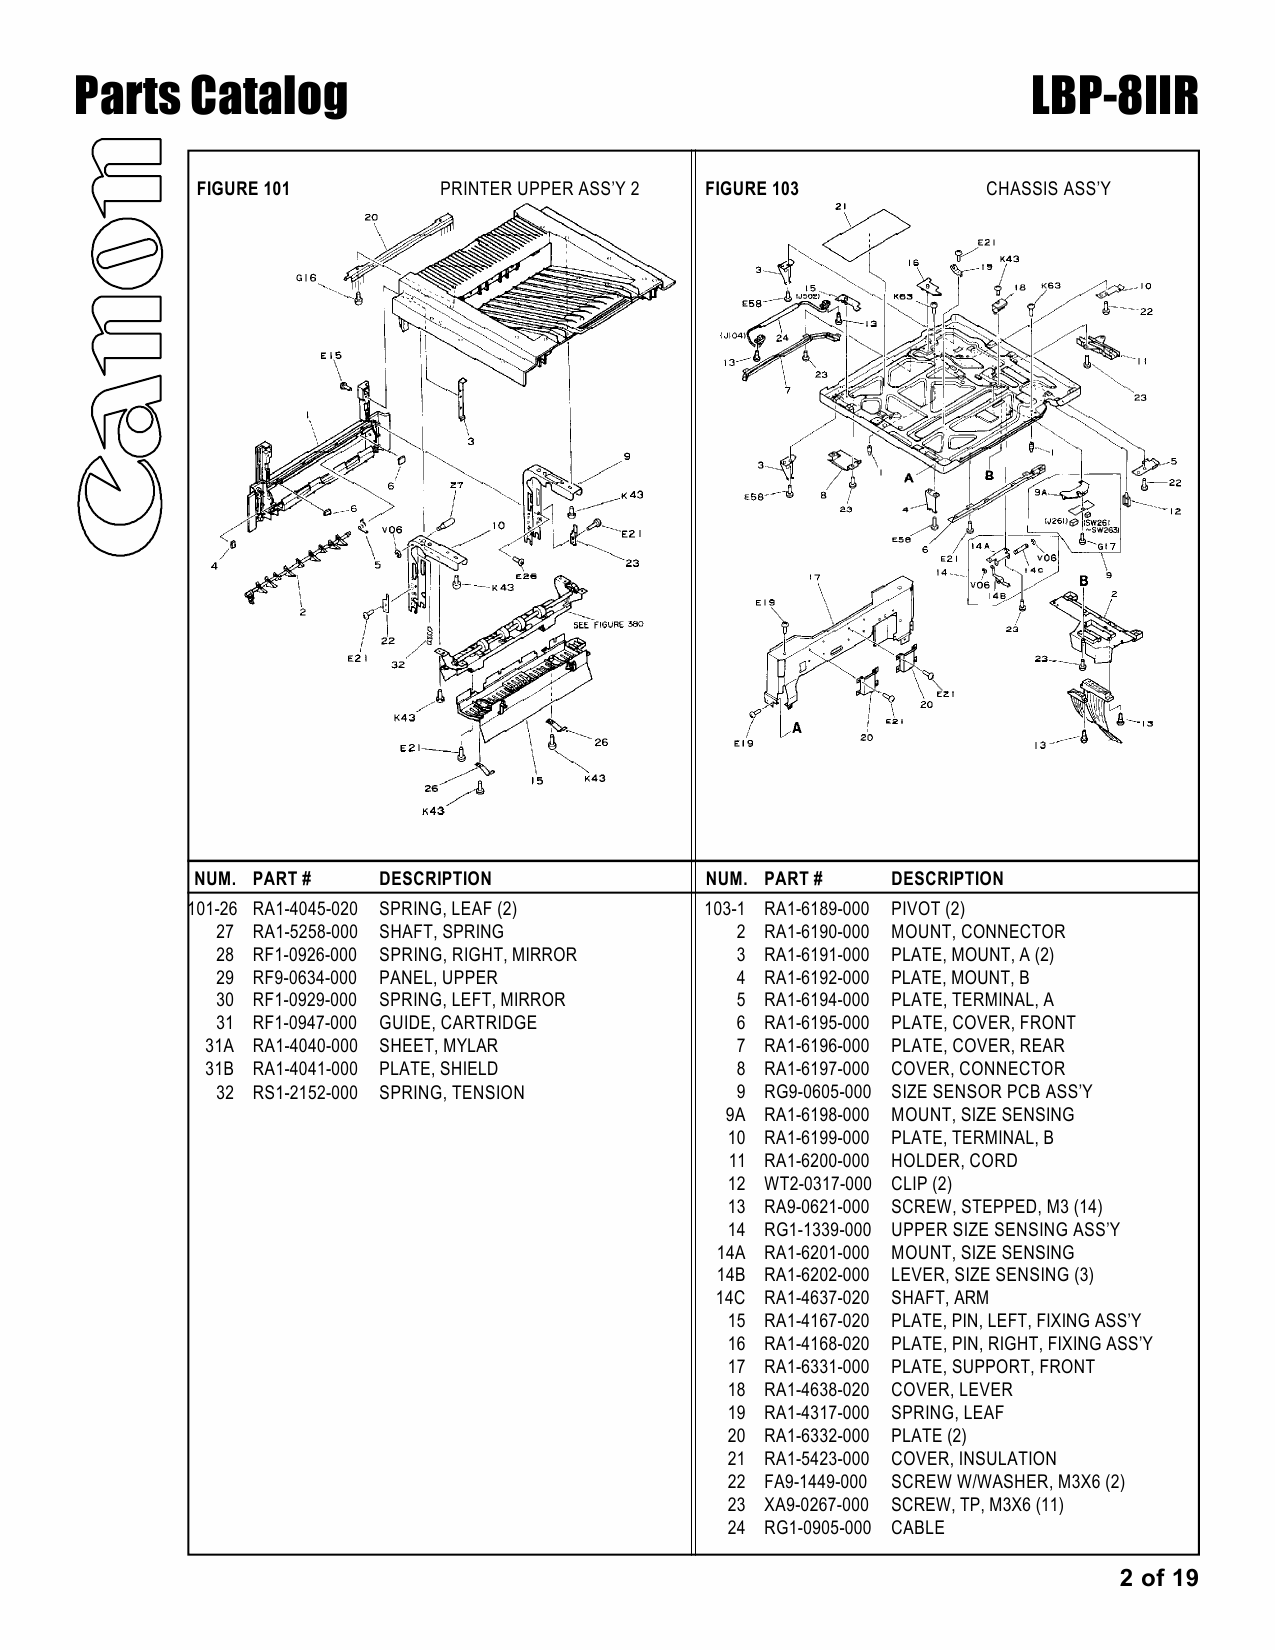 Canon imageCLASS LBP-8IIR Parts Catalog Manual-2